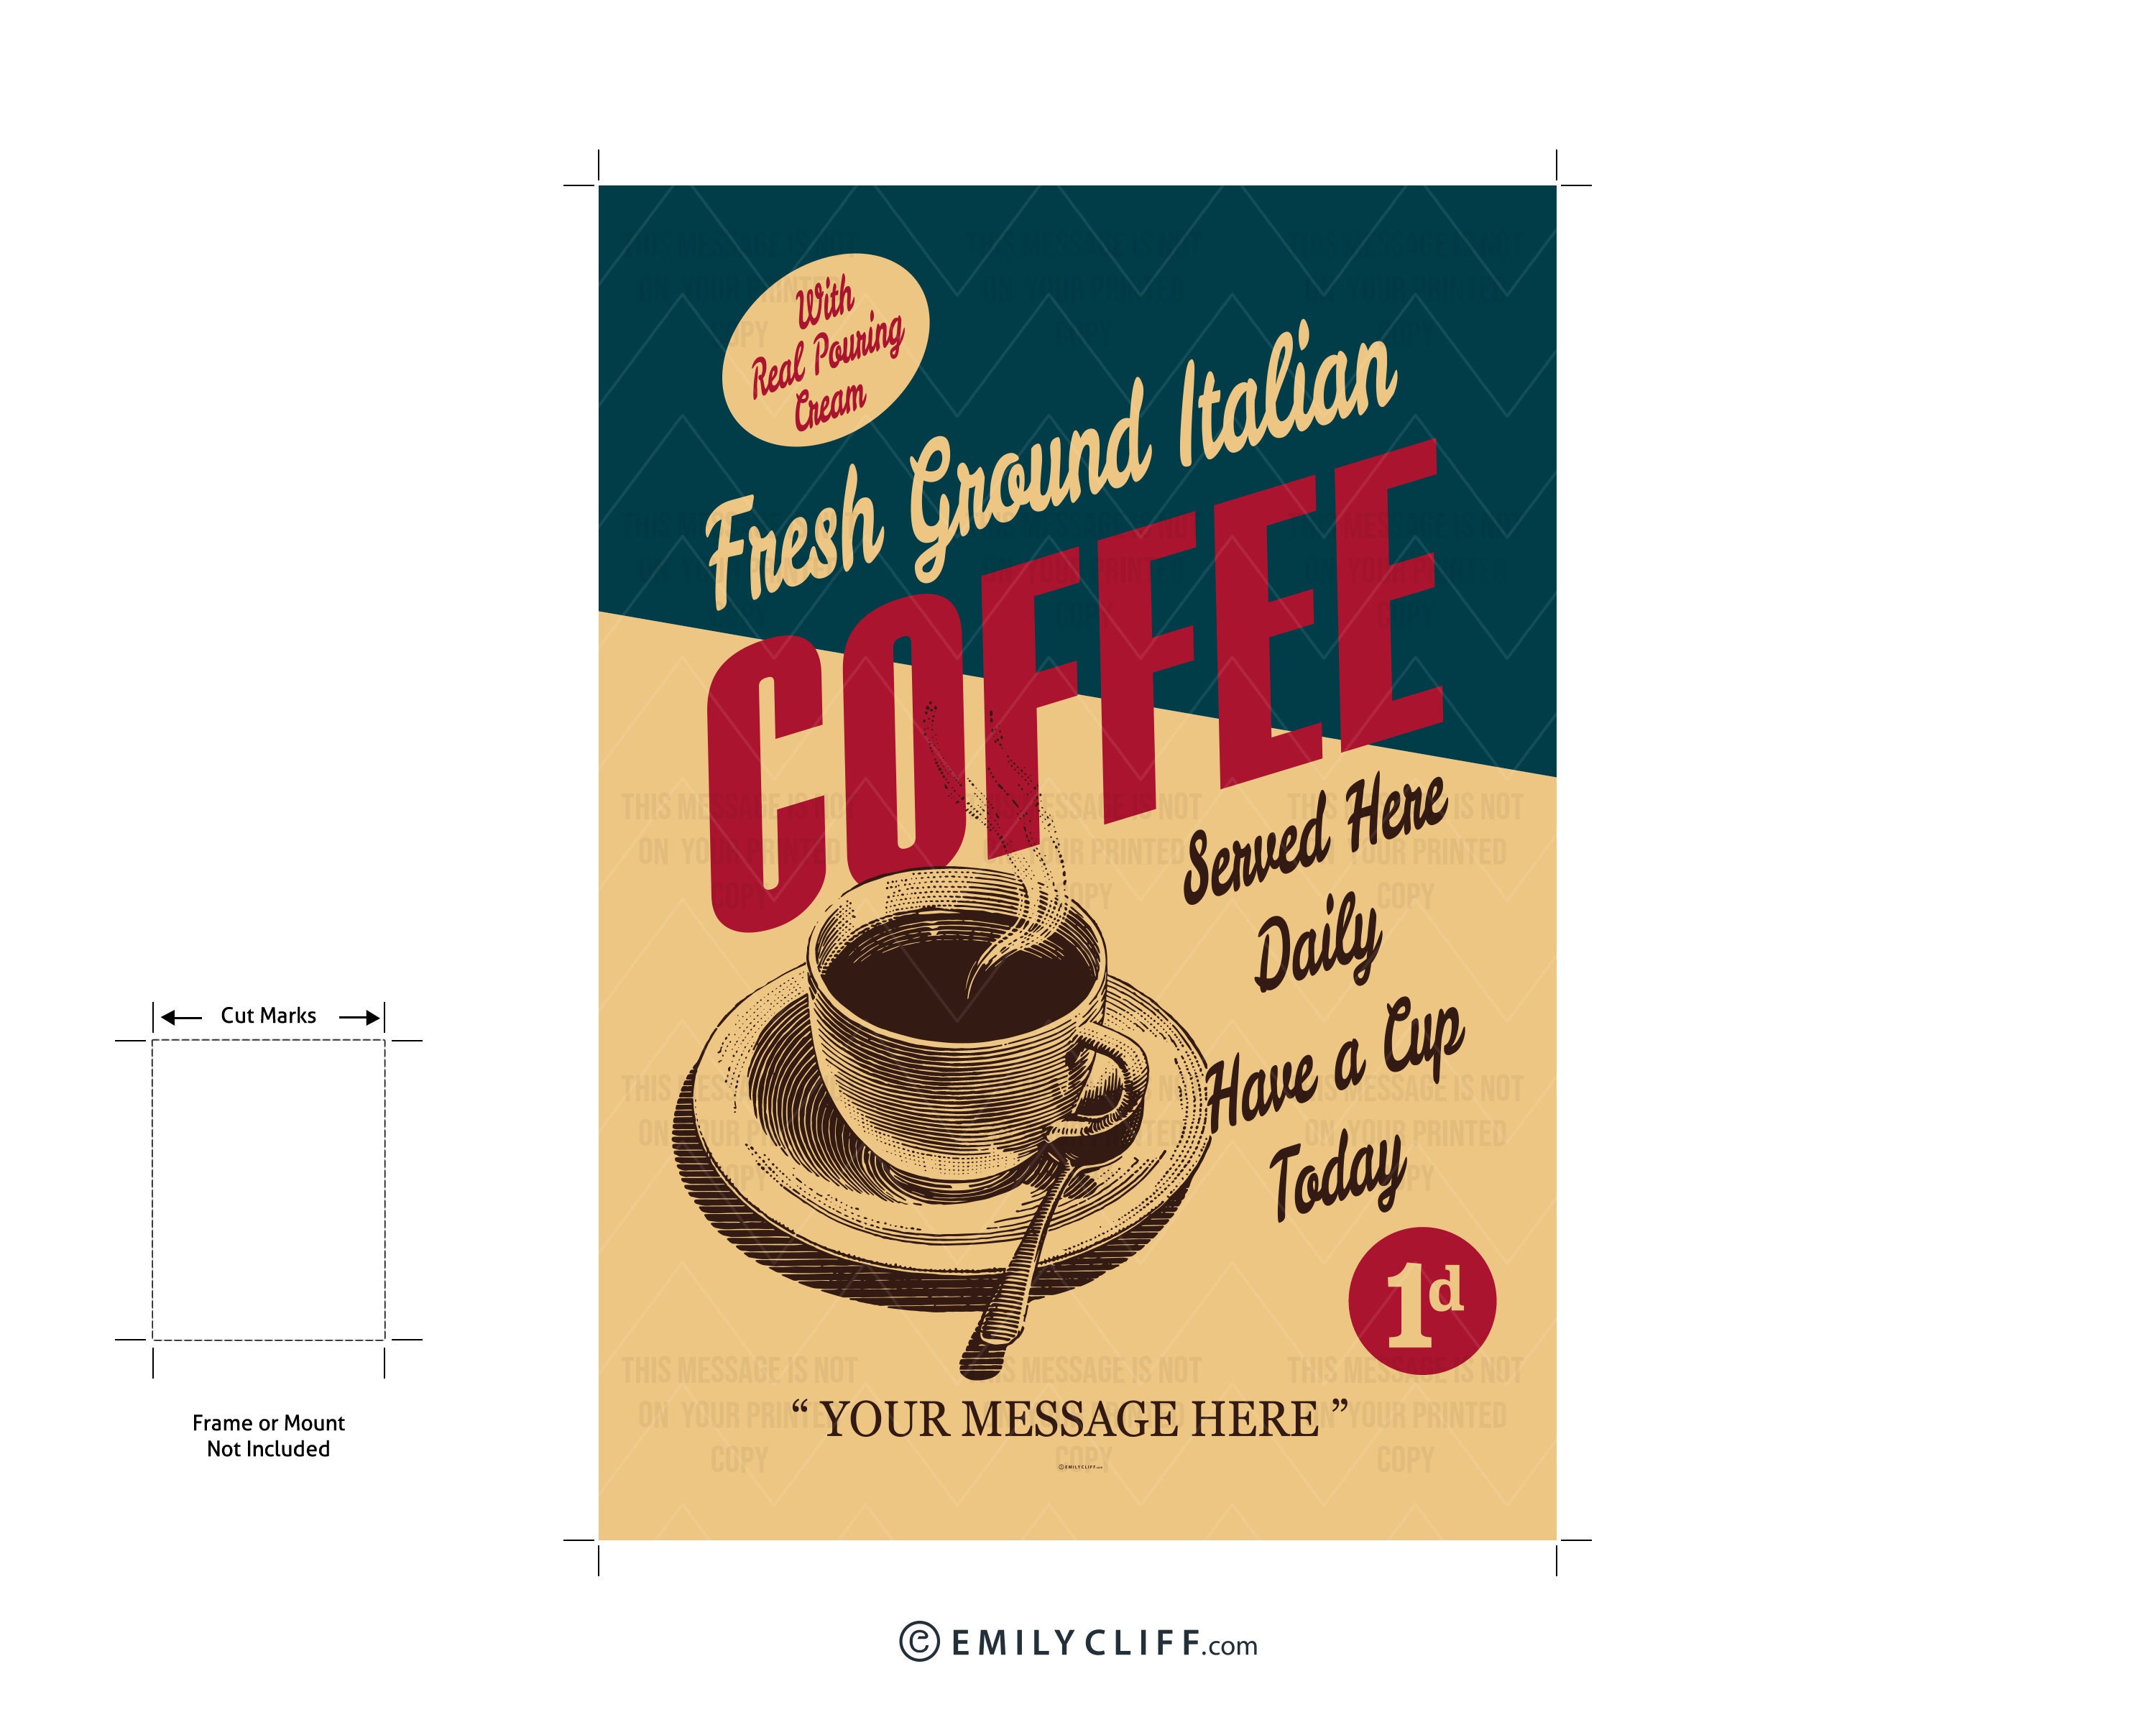 Italienskt kaffe vintage poster